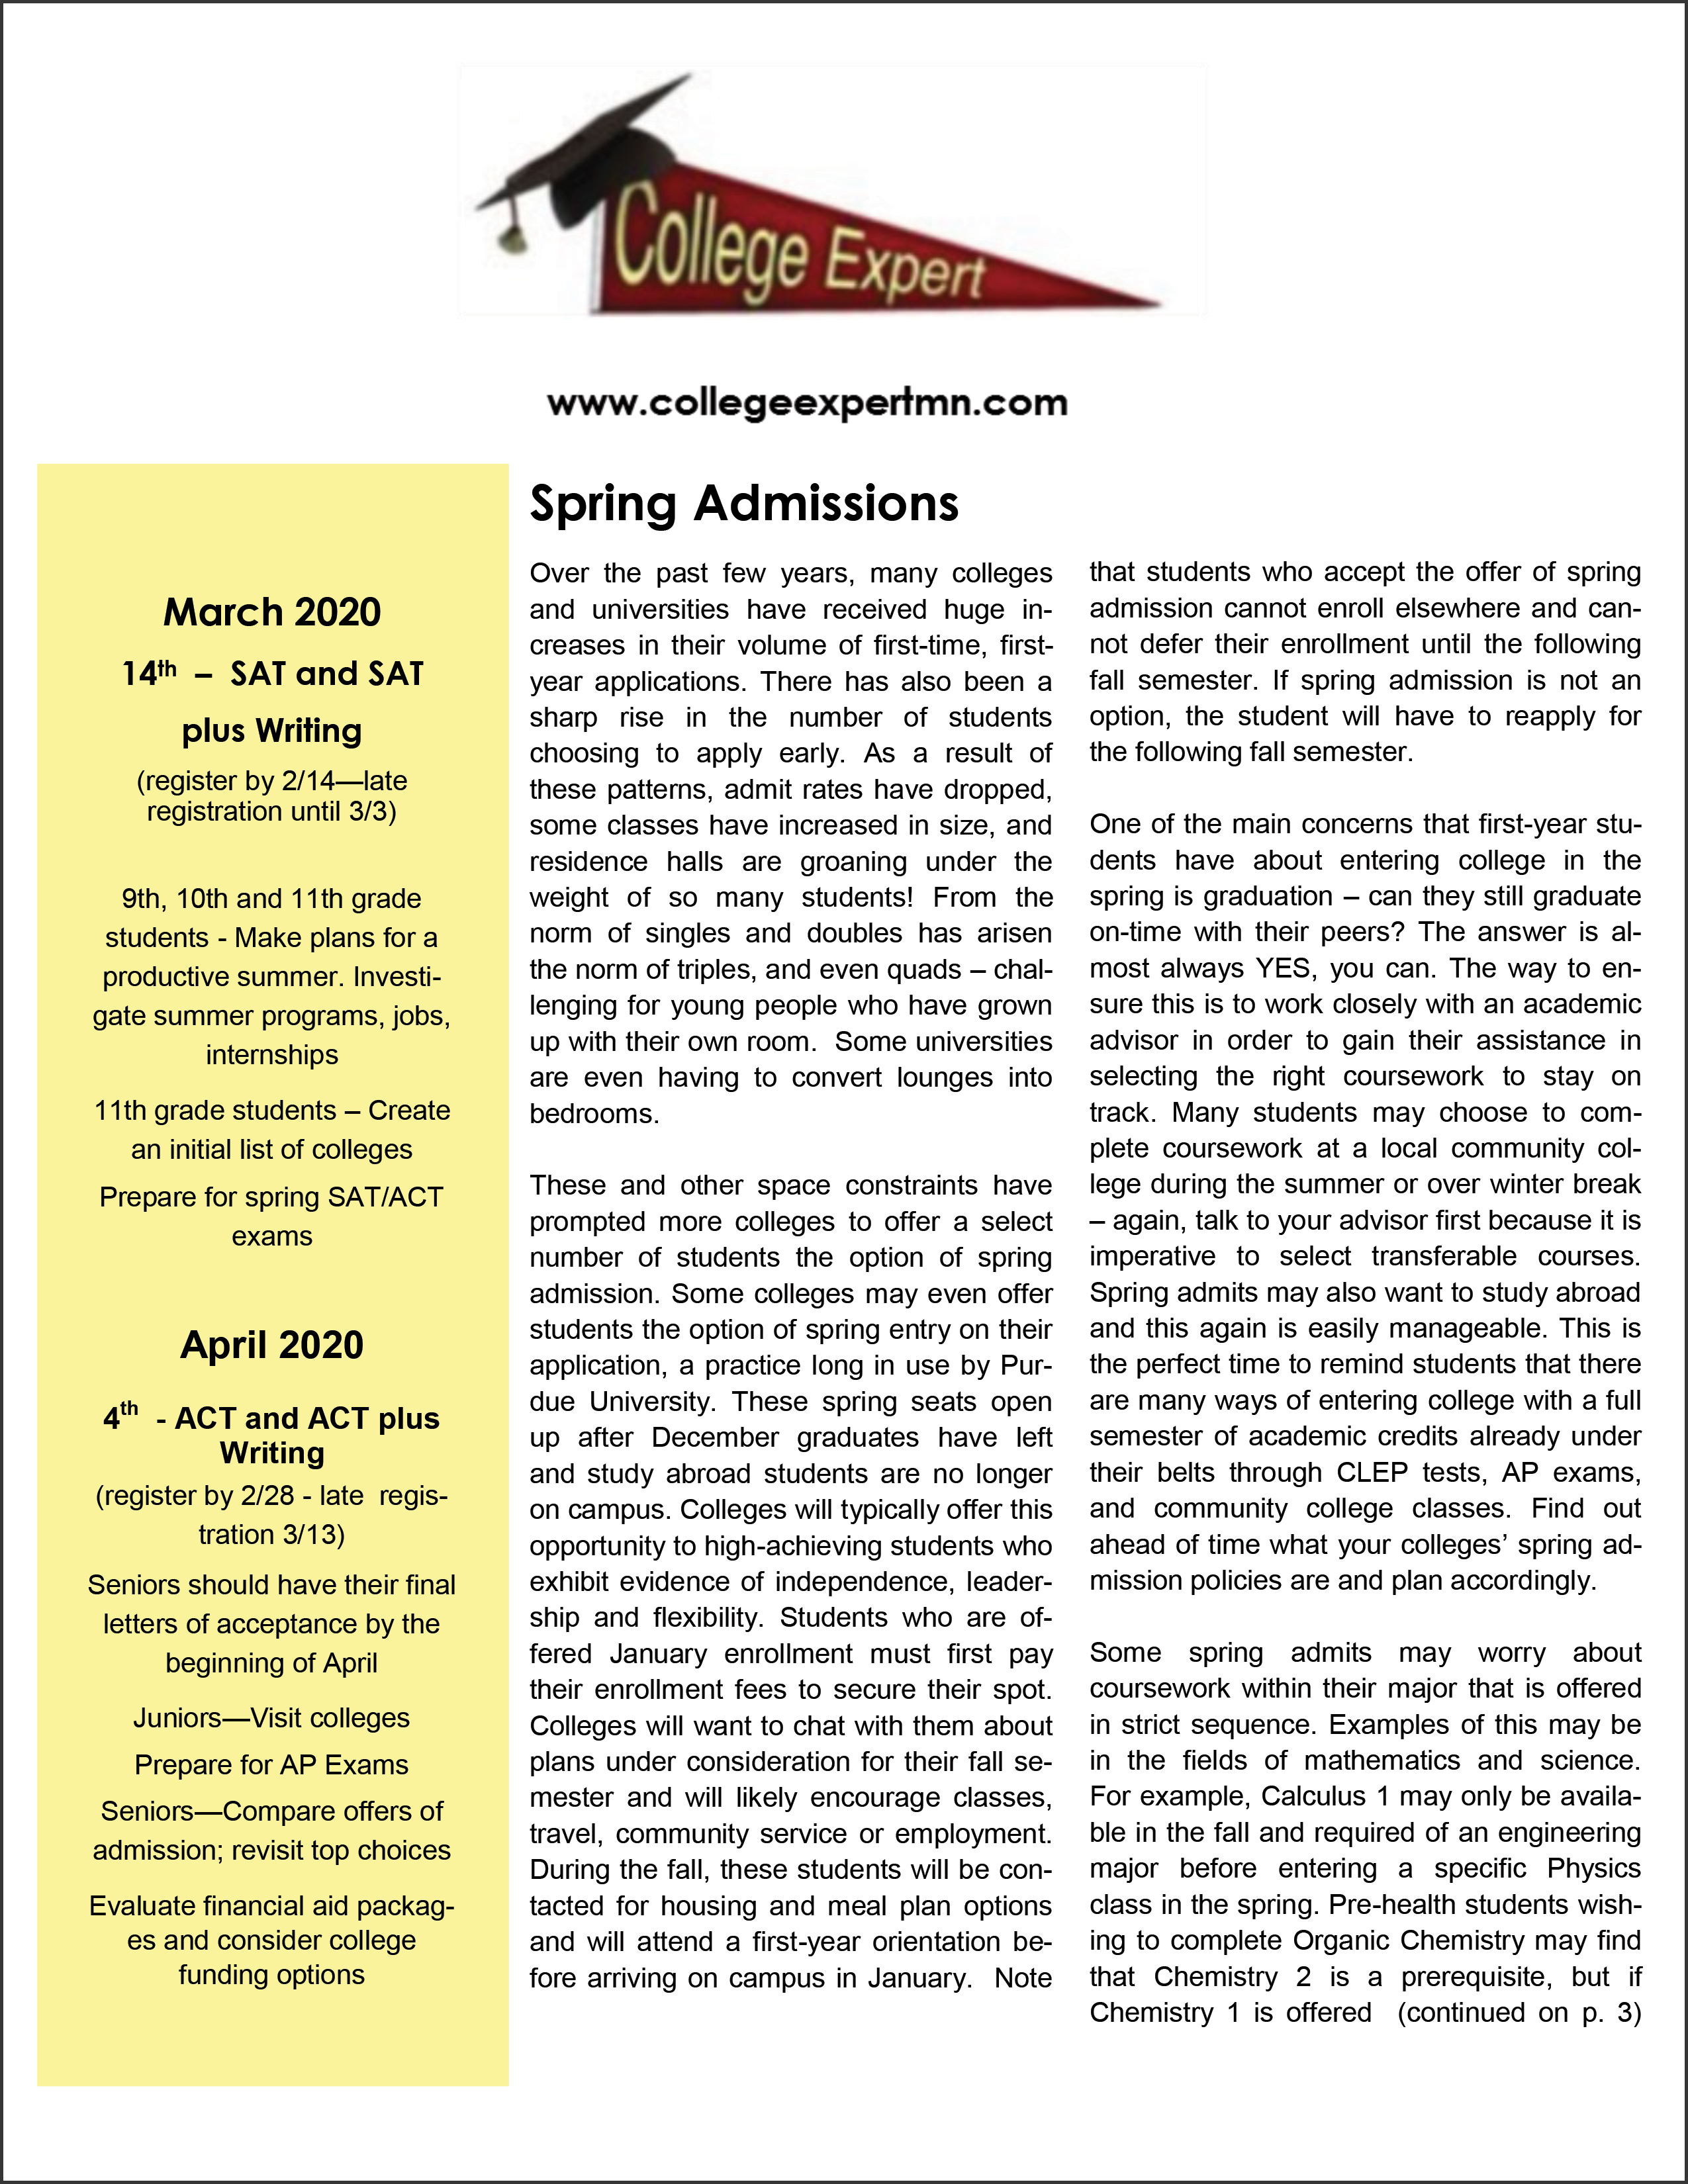 March 2020 College Expert Newsletter